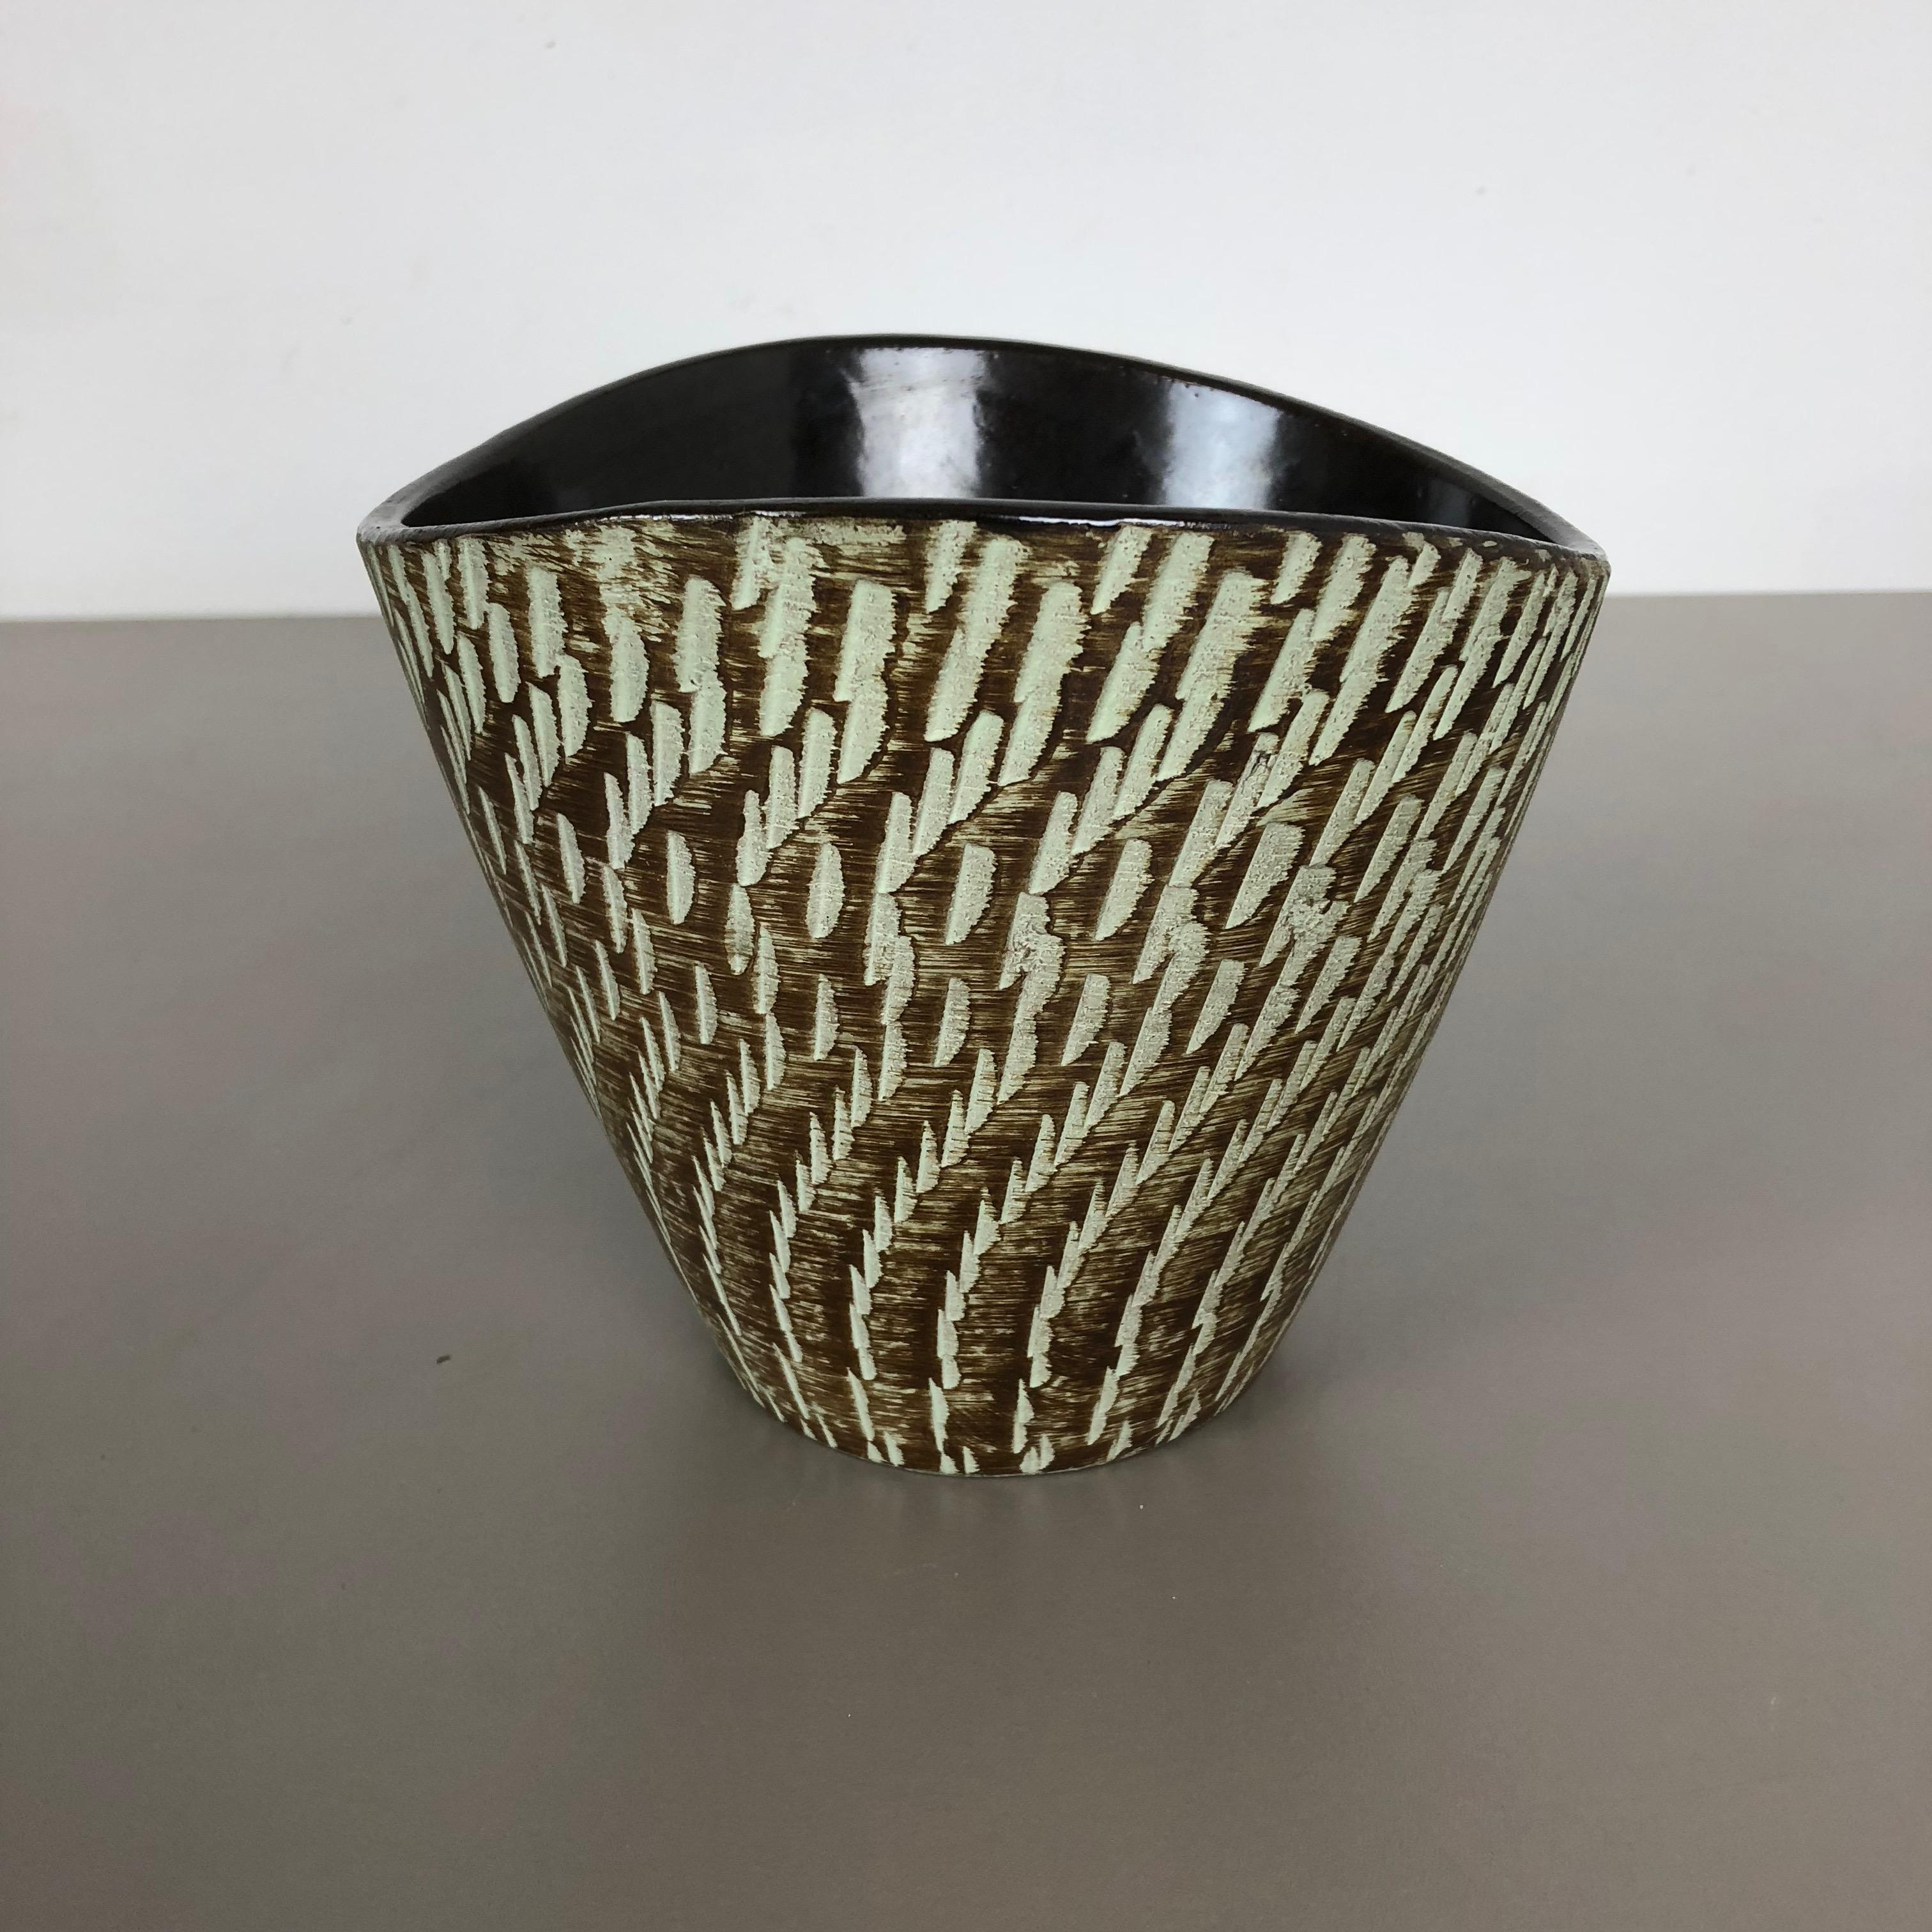 20th Century Original Ceramic Pottery Planter Pot Vase by Dümmler and Breiden, Germany, 1950s